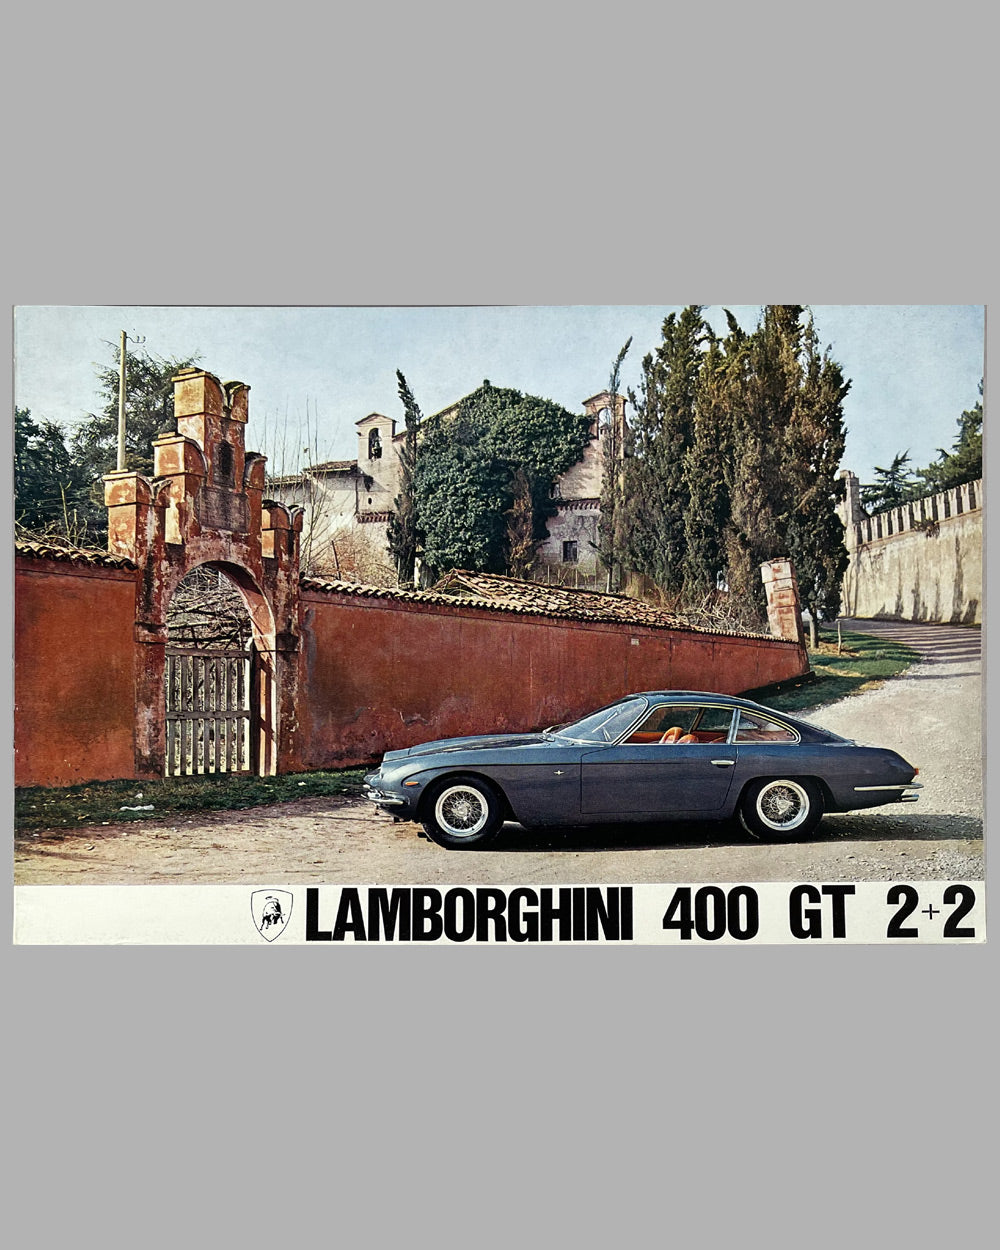 Lamborghini 400 GT 2+2 factory sales brochure, late 1960’s